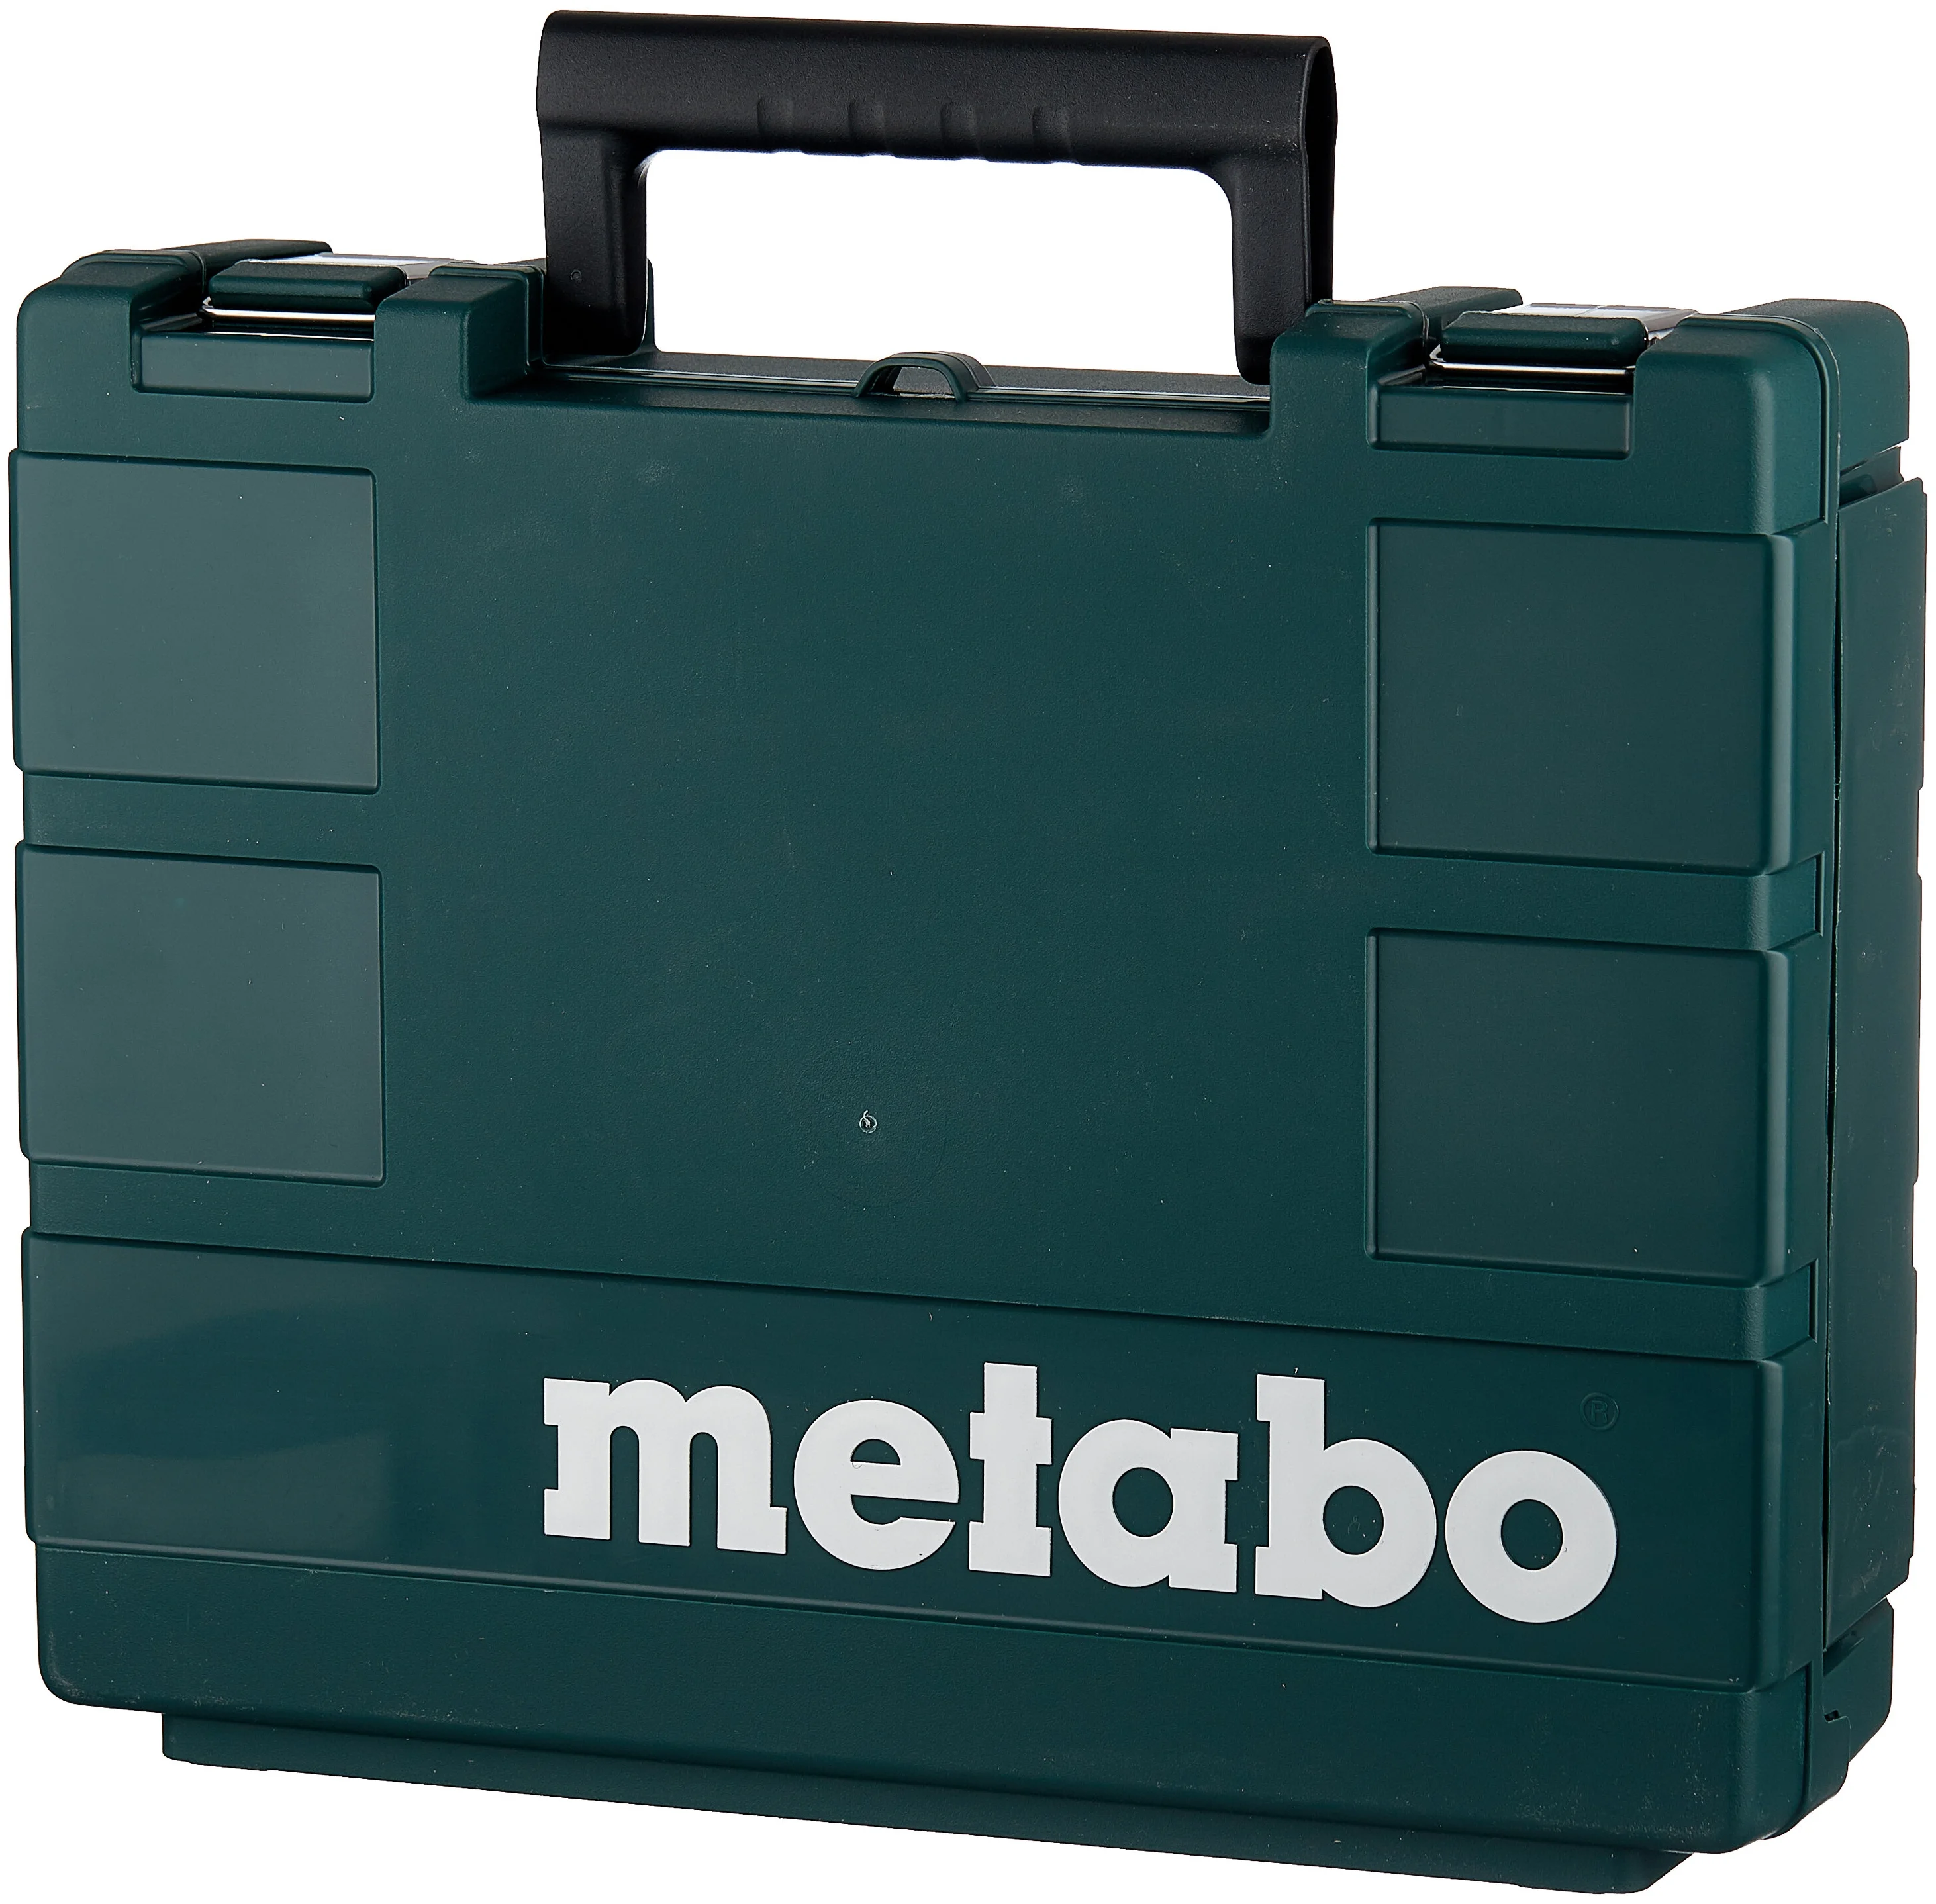 Metabo PowerMaxx BS Basic 12V (600080500/600080950) - макс. диаметр сверления (металл): 10 мм